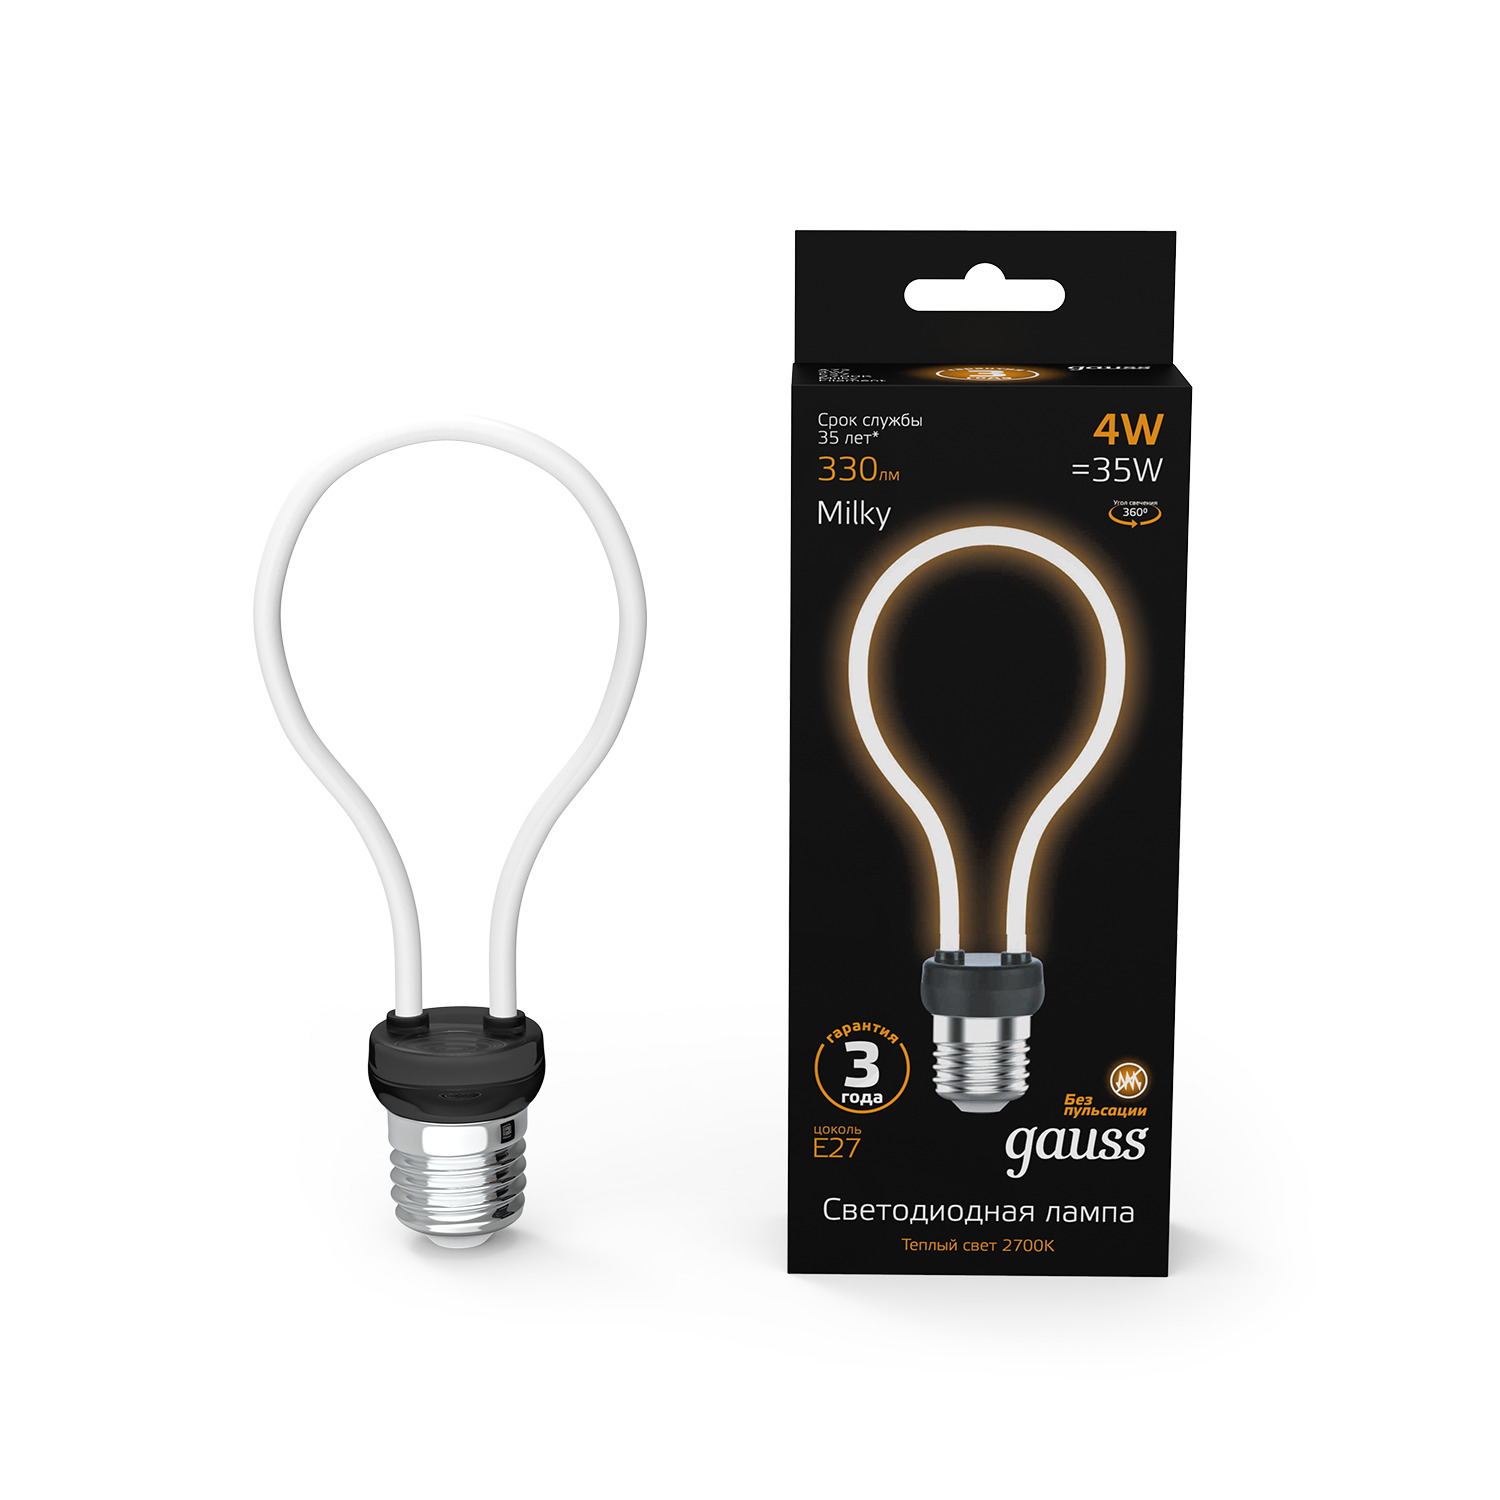 Лампа Gauss LED Filament Bulbless A72 Milky E27 4W 330 Лм 2700K 72x160мм лампа gauss led filament bulbless ct35 milky e14 4w 330 лм 2700k 35x150мм